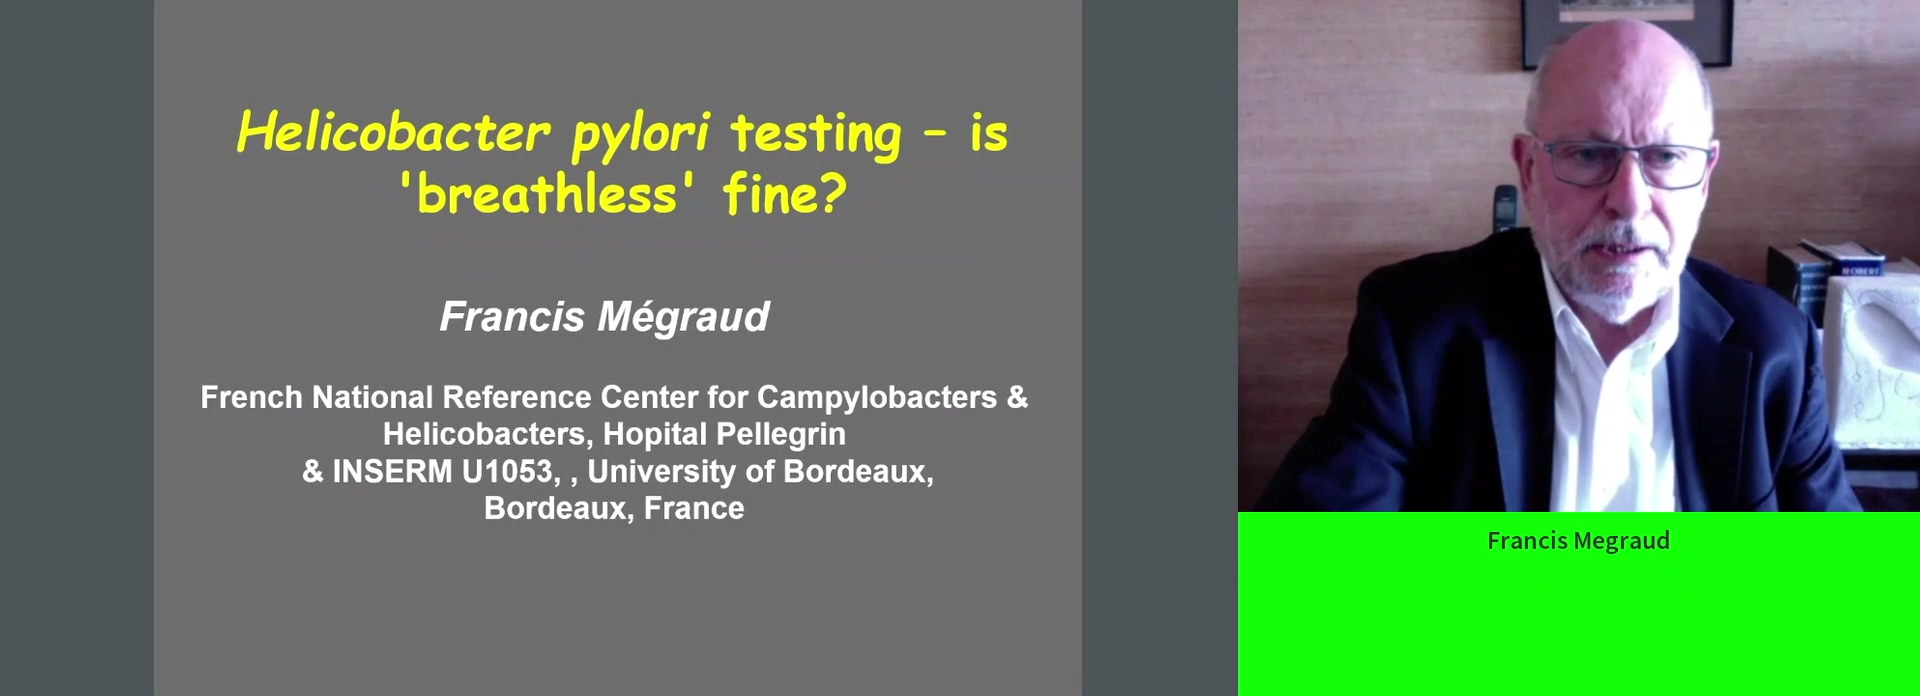 H. pylori testing: Is breathless fine?